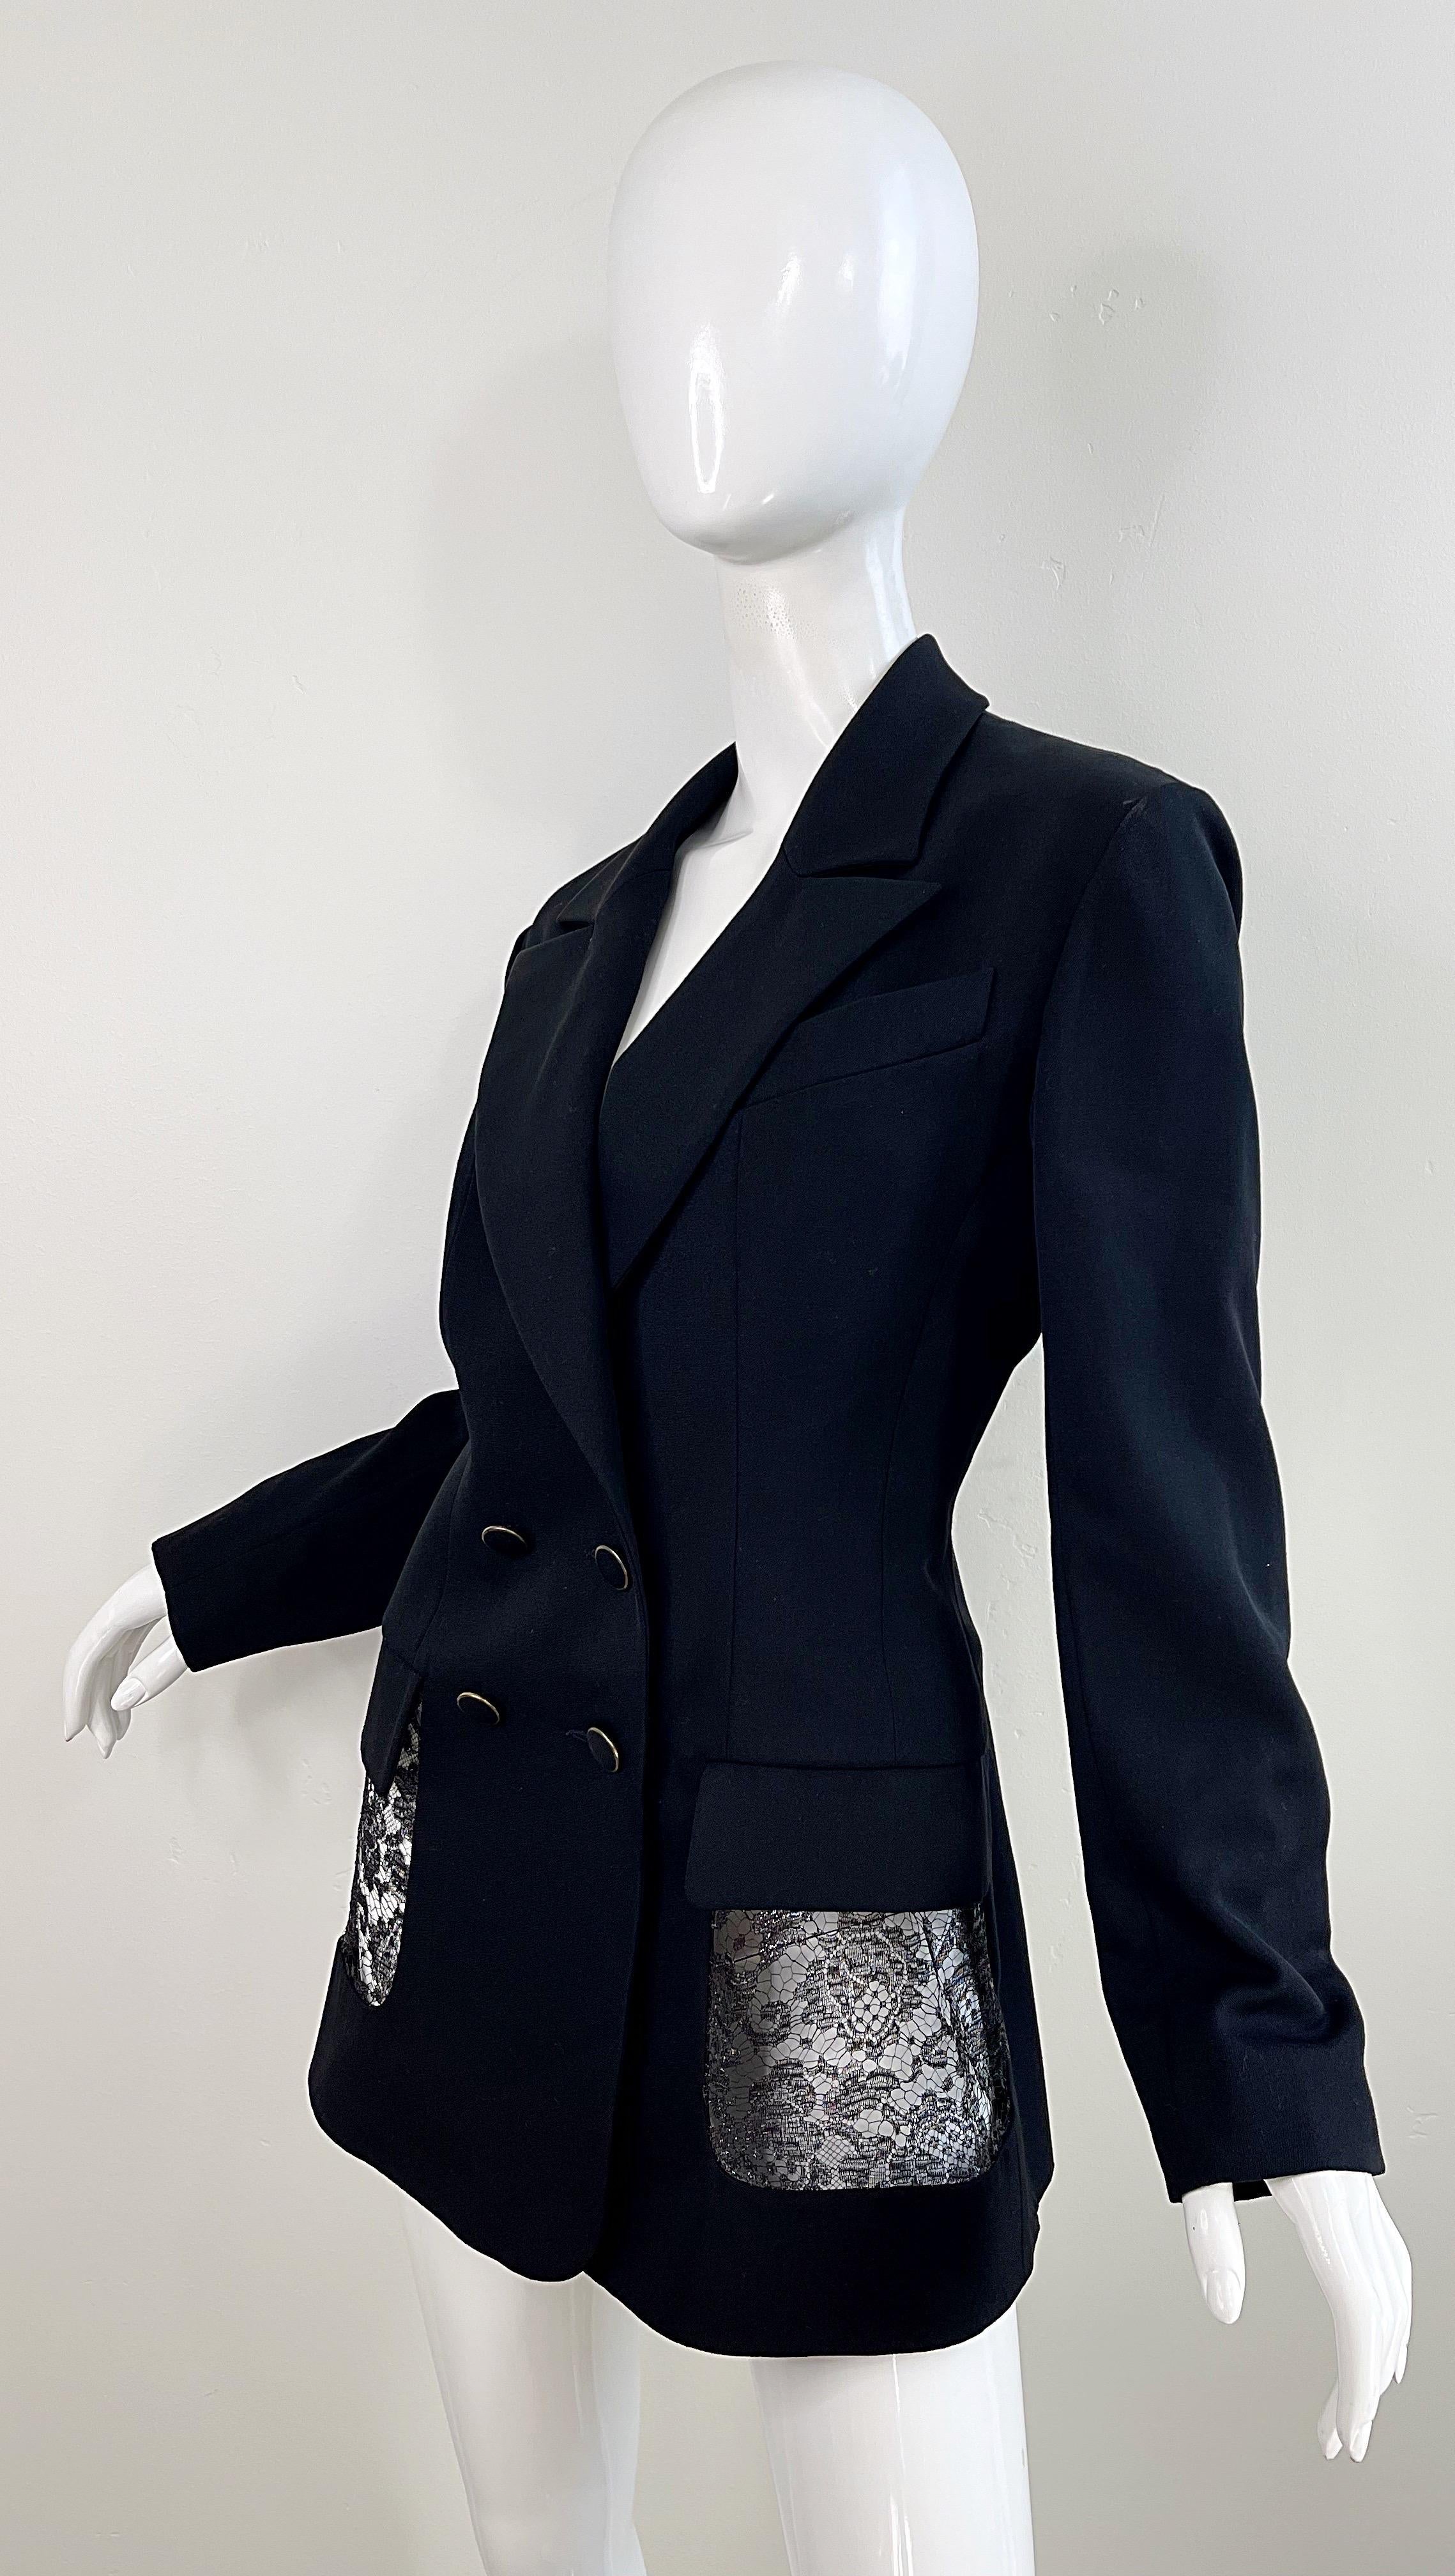 Karl Lagerfeld 1980s Black Lace Cut - Out Size 44 / 10 12 Vintage Dress + Jacket For Sale 6